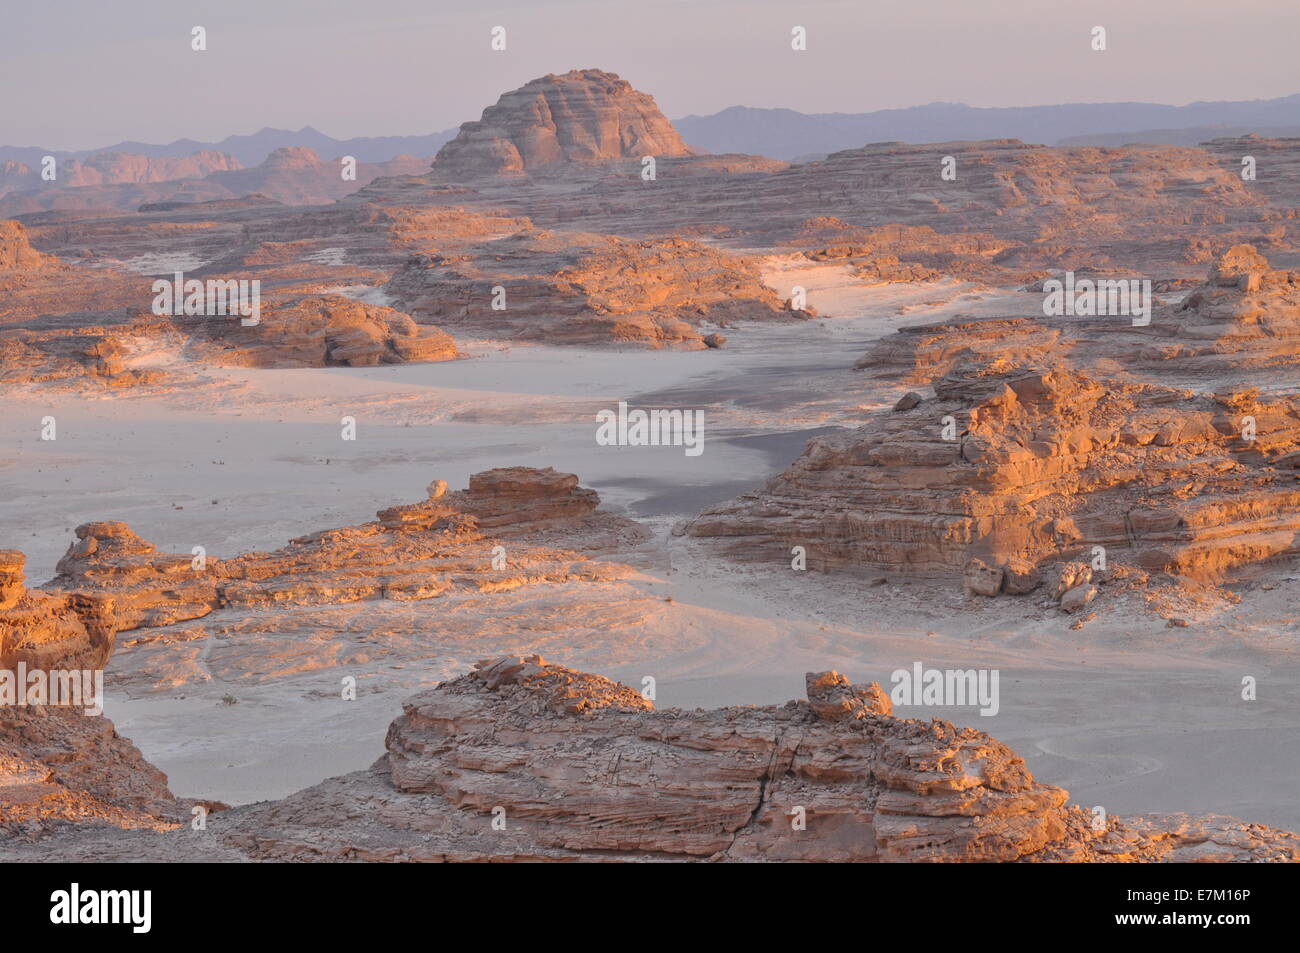 Egypt, Sinai: the desert of Wadi Arada Stock Photo